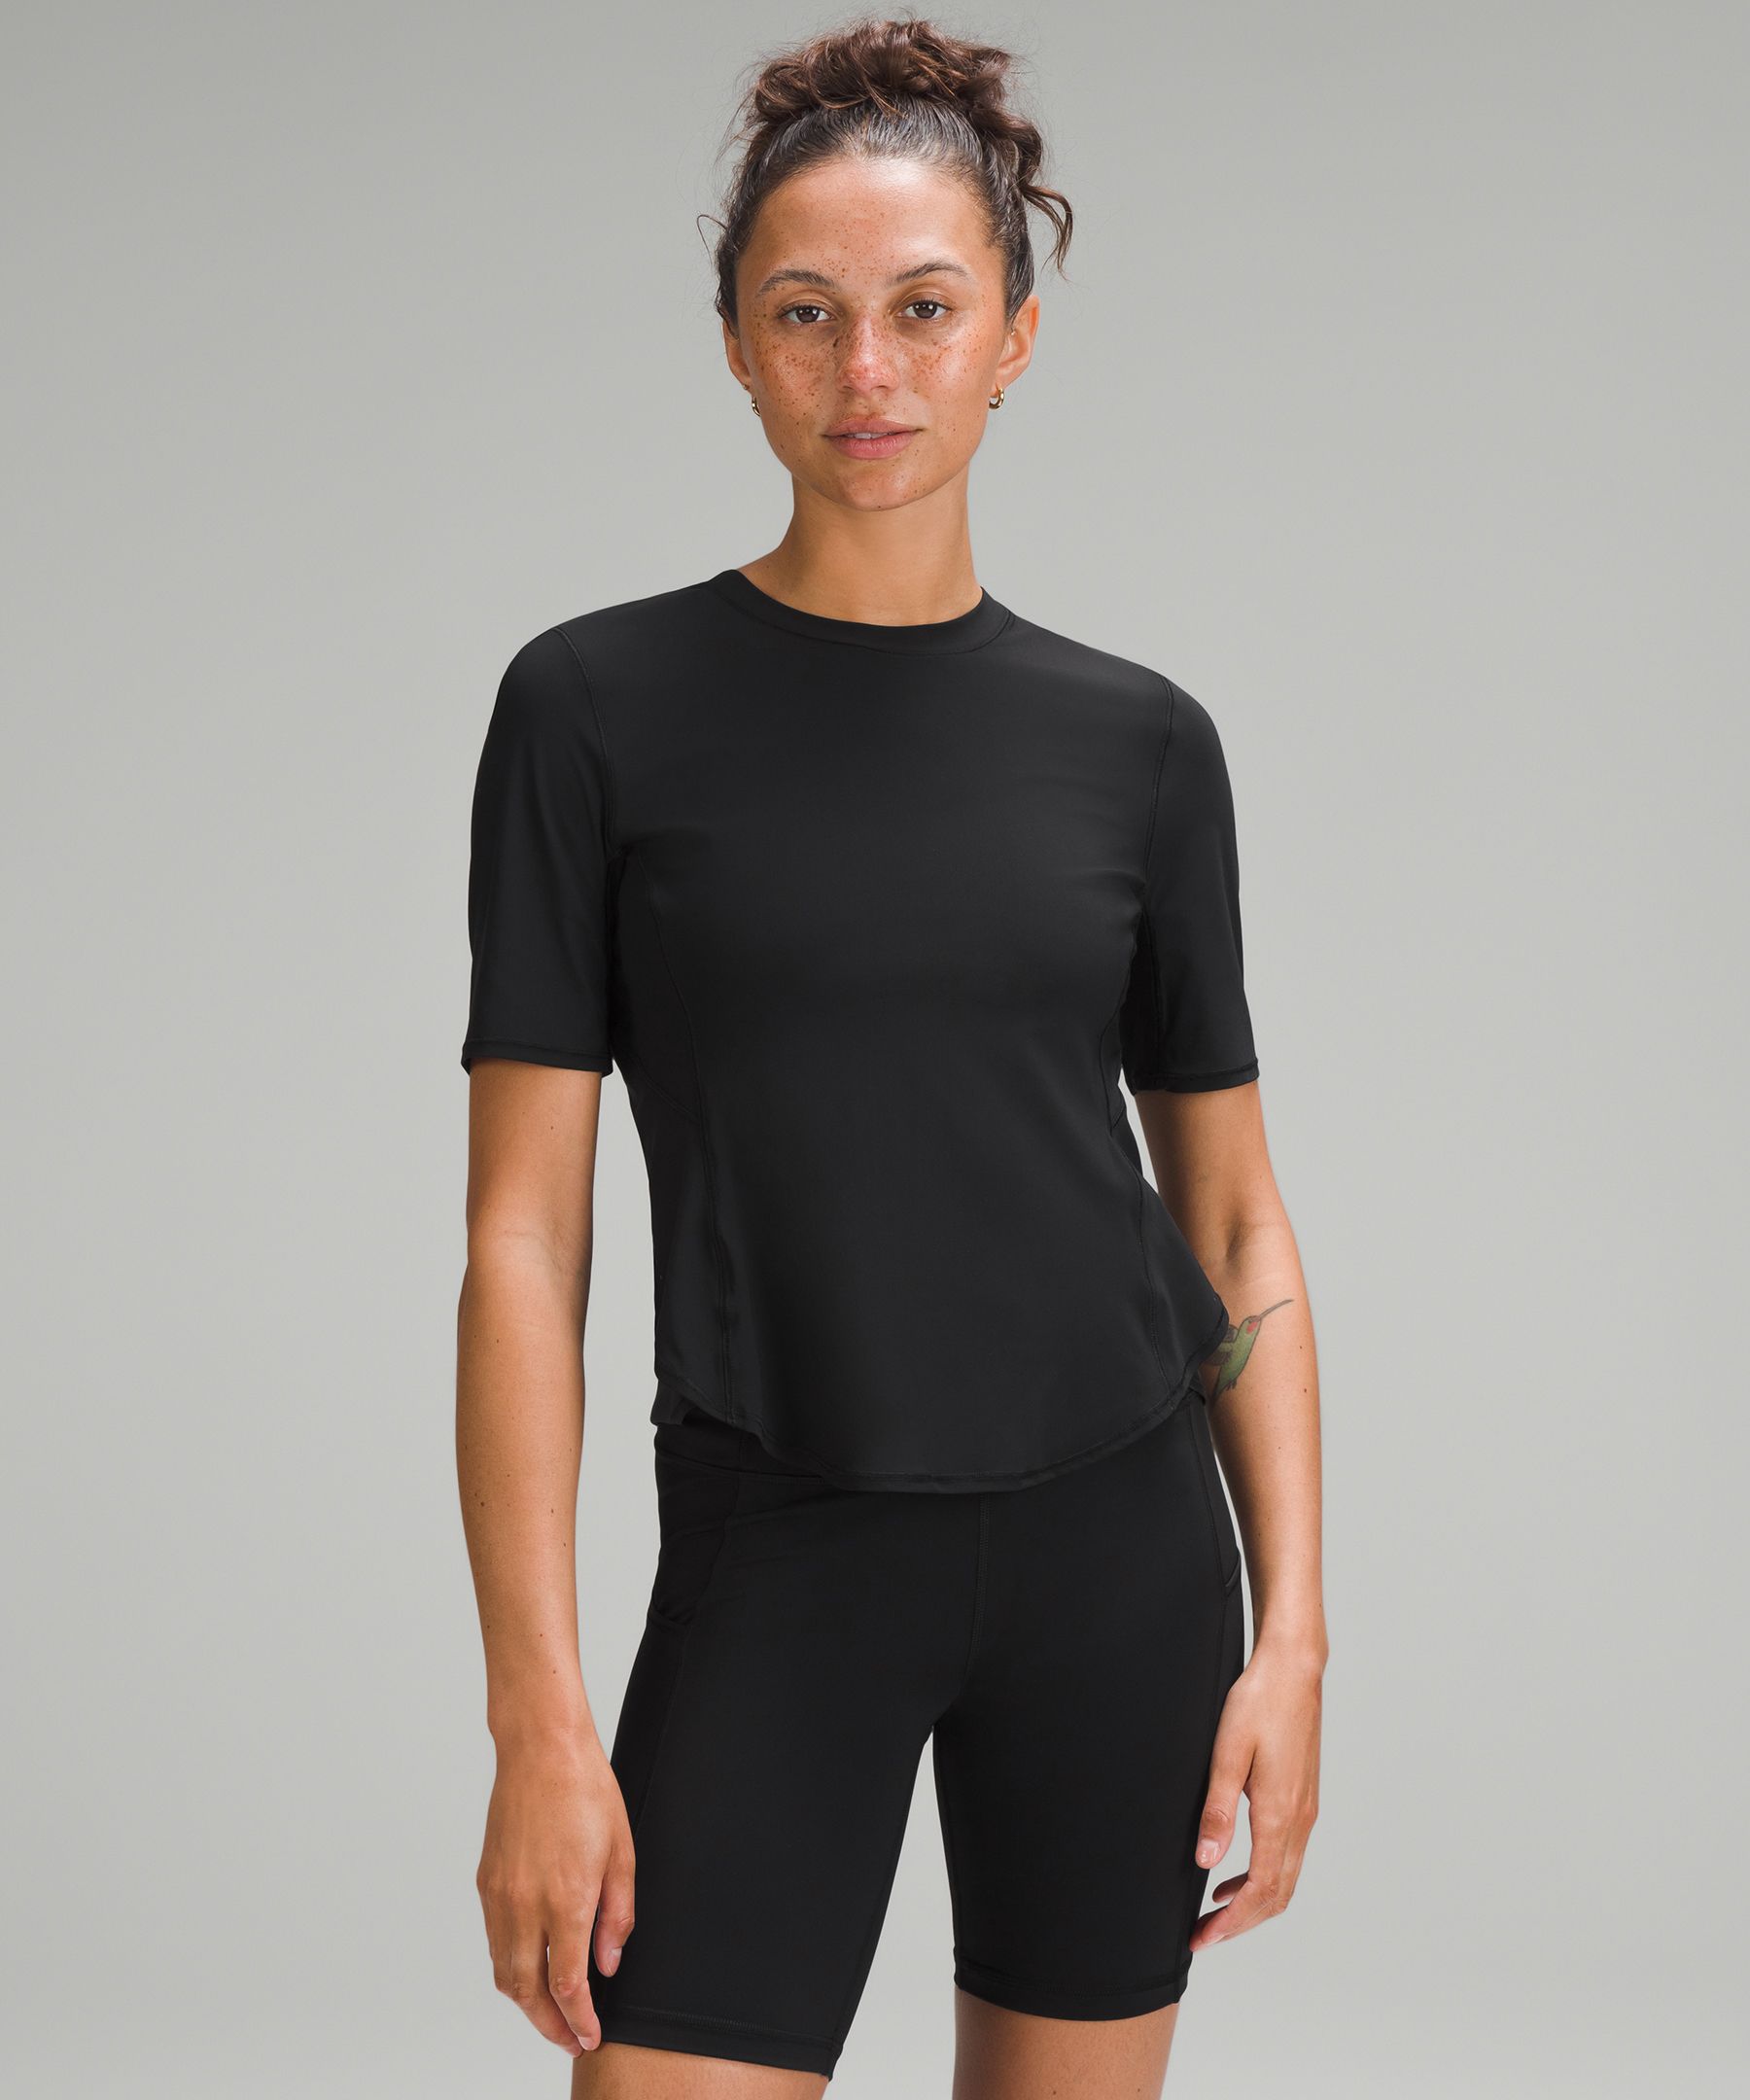 Lululemon Black Short Sleeve Tech Tee T-shirt Top Ruched Back Runner Up Size  4/6